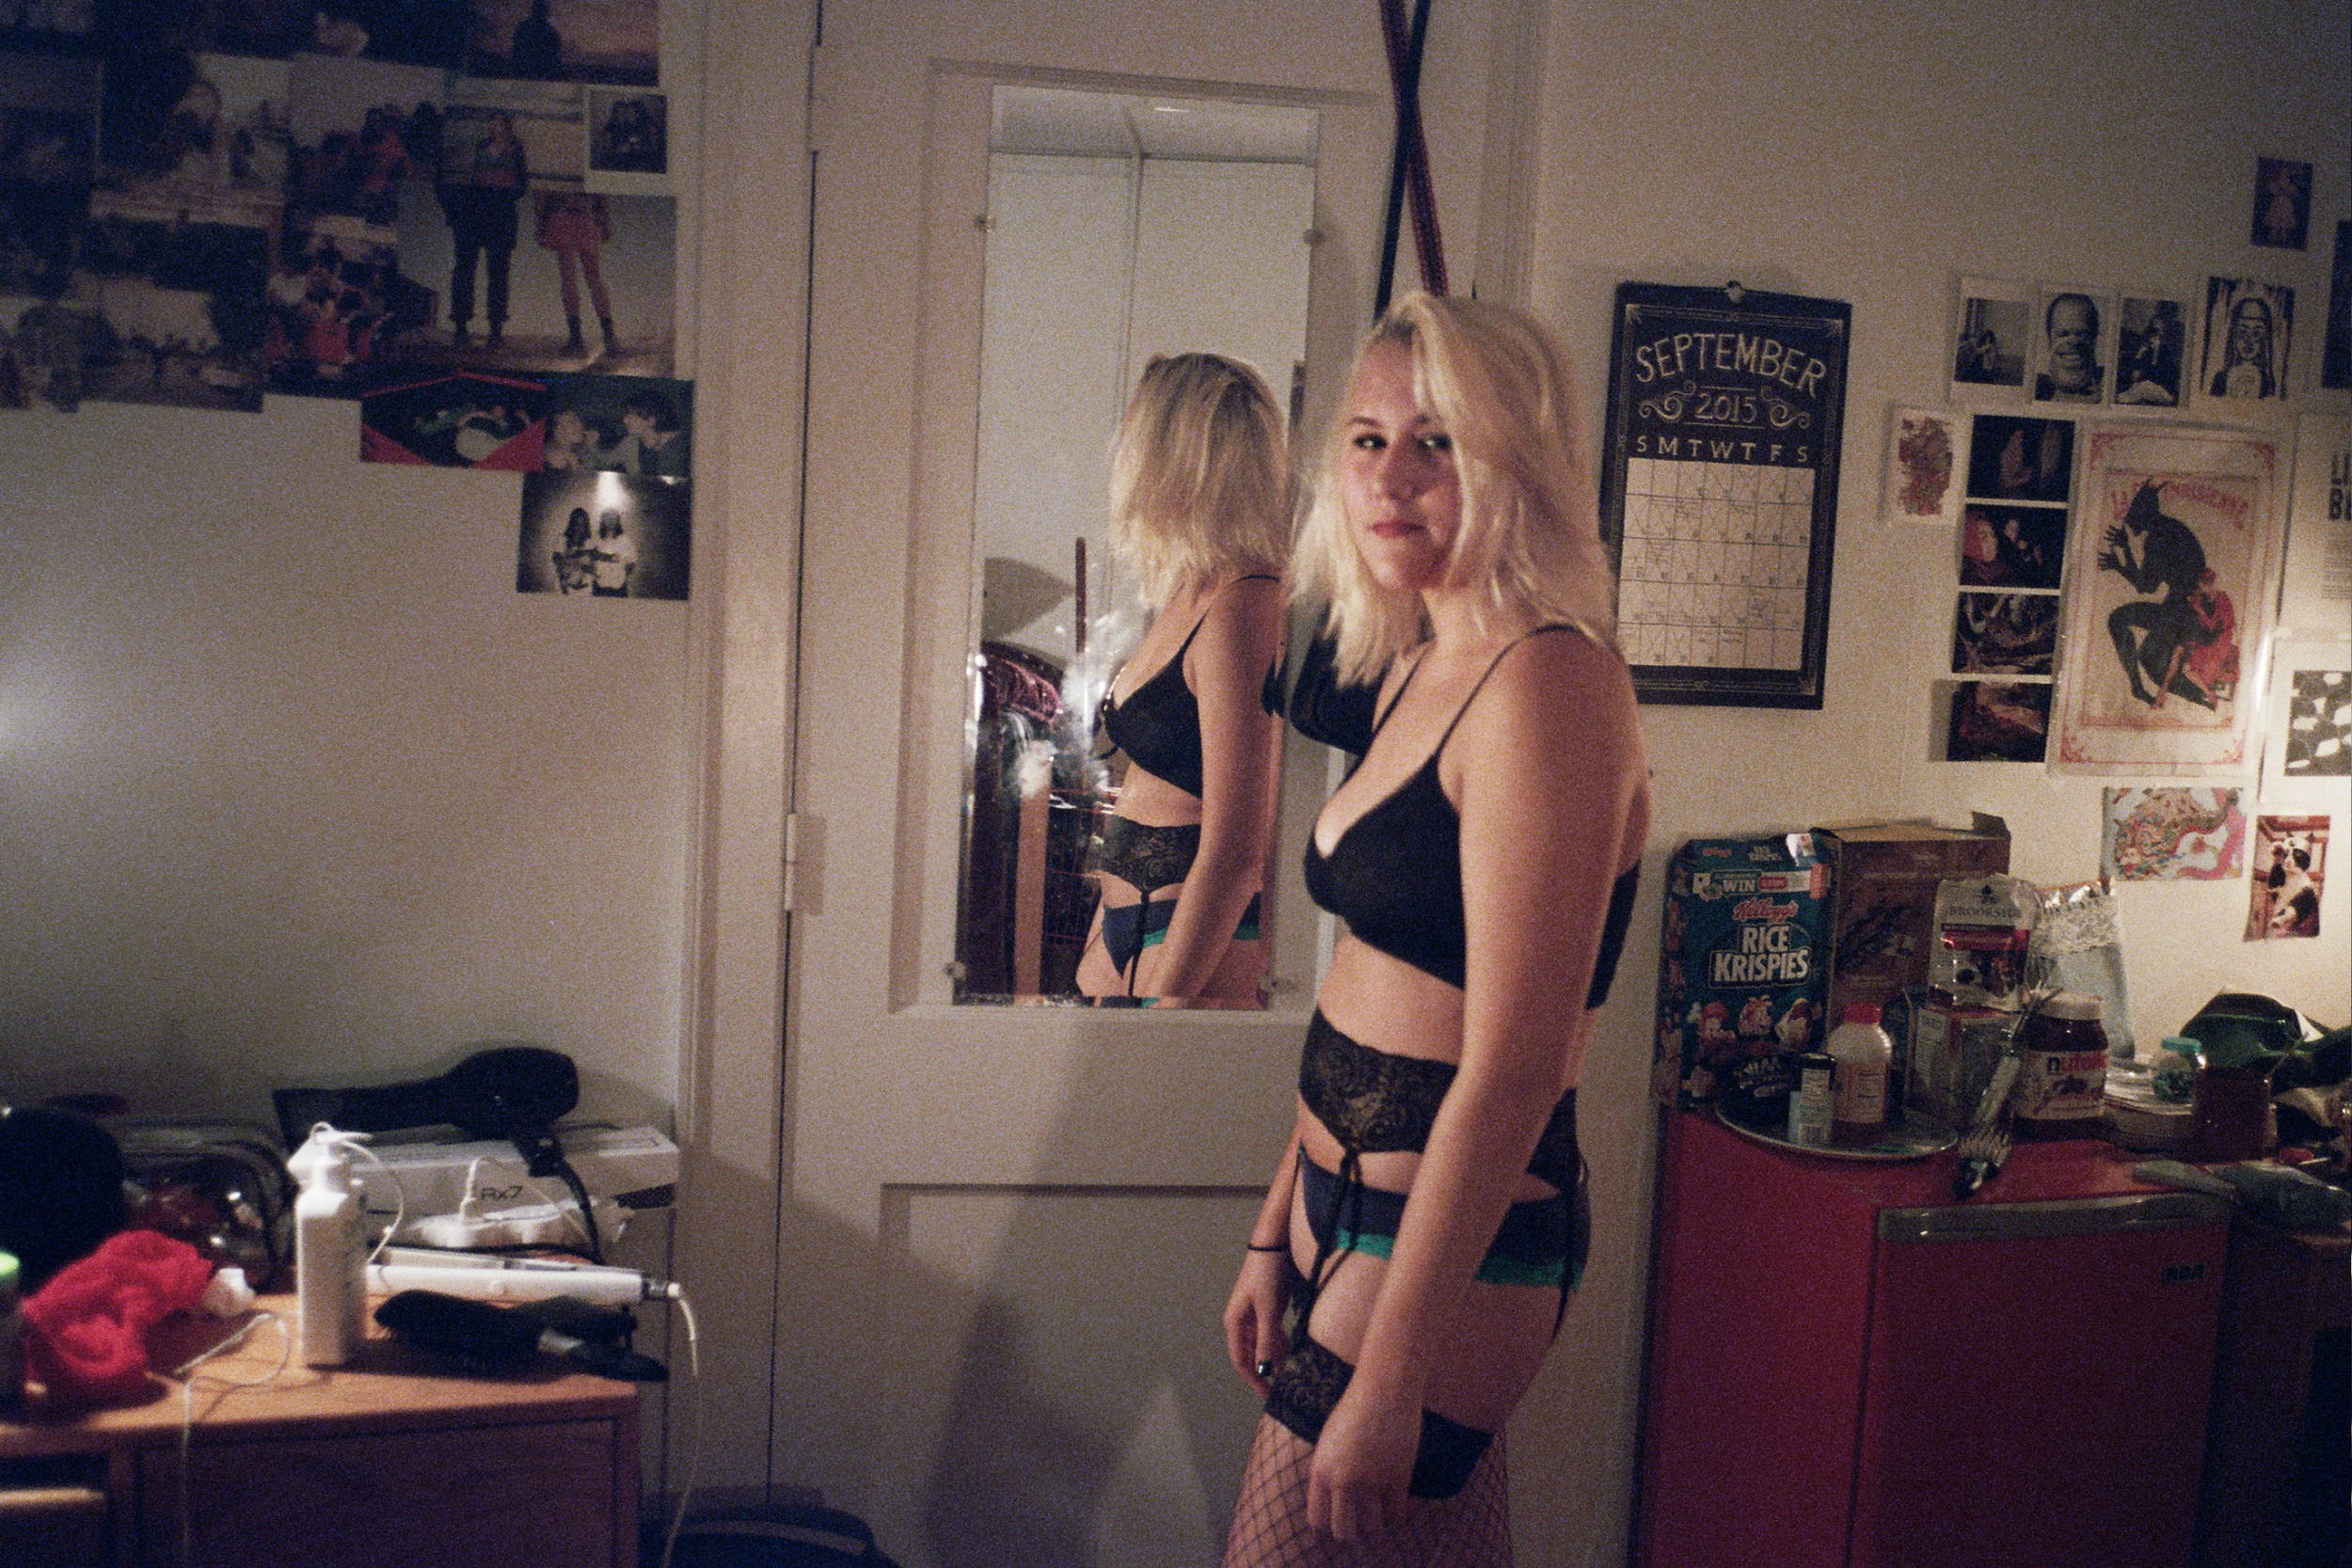   My Roommate Sara, 2015.    © Cameron Schiller  